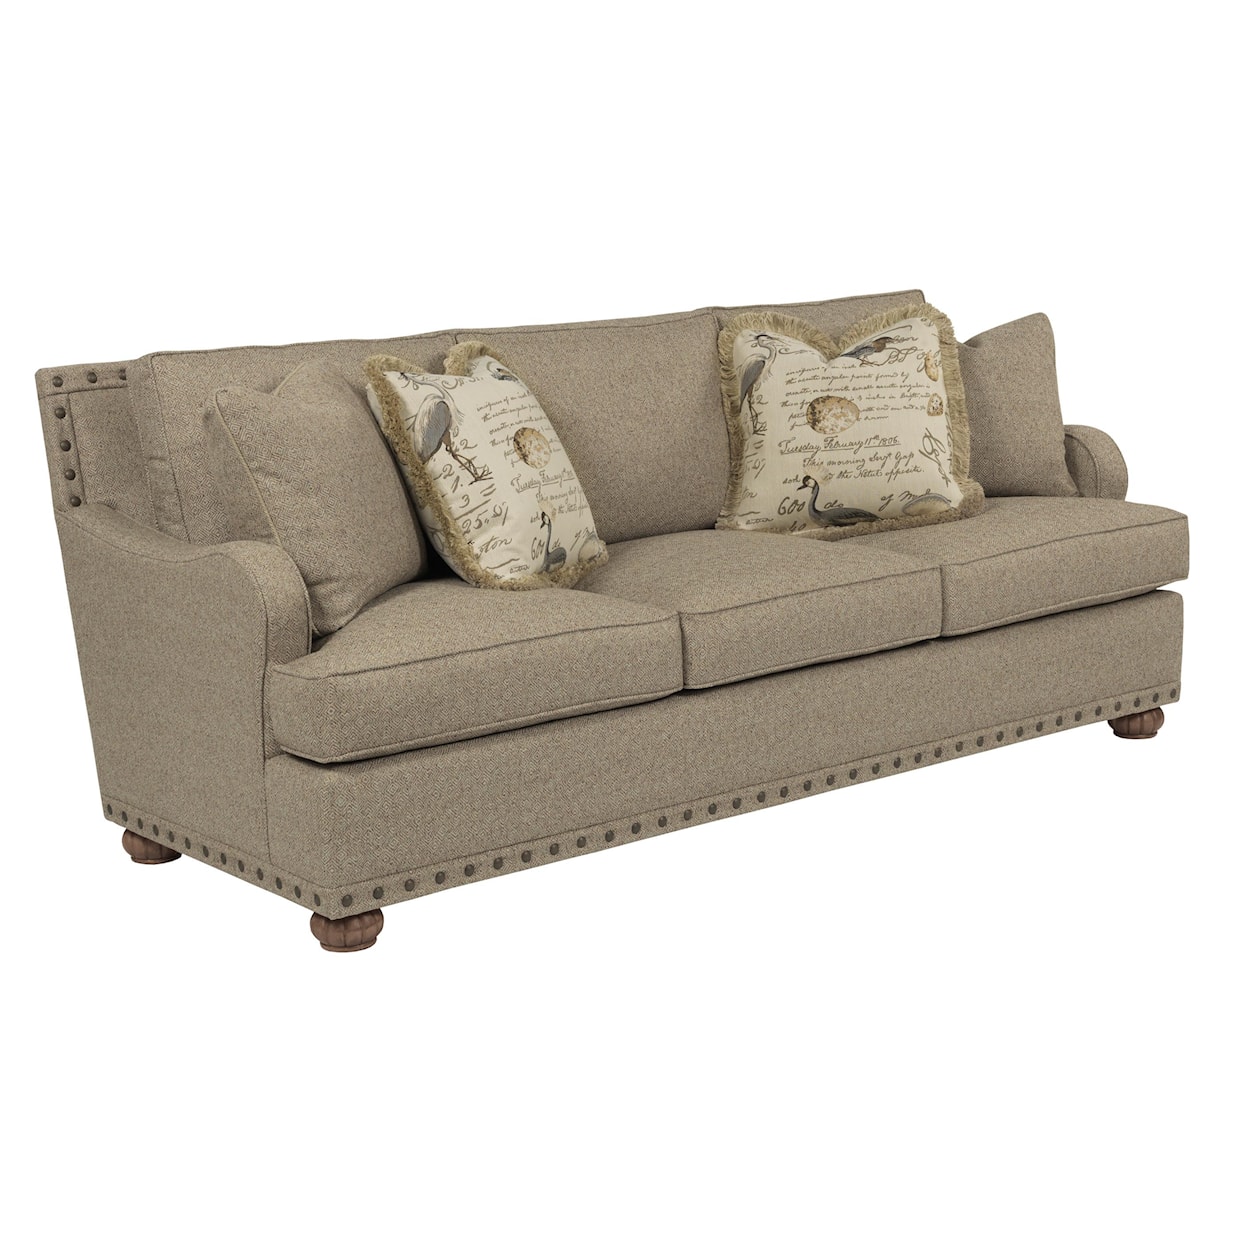 Kincaid Furniture Harper 3-Seater Stationary Sofa